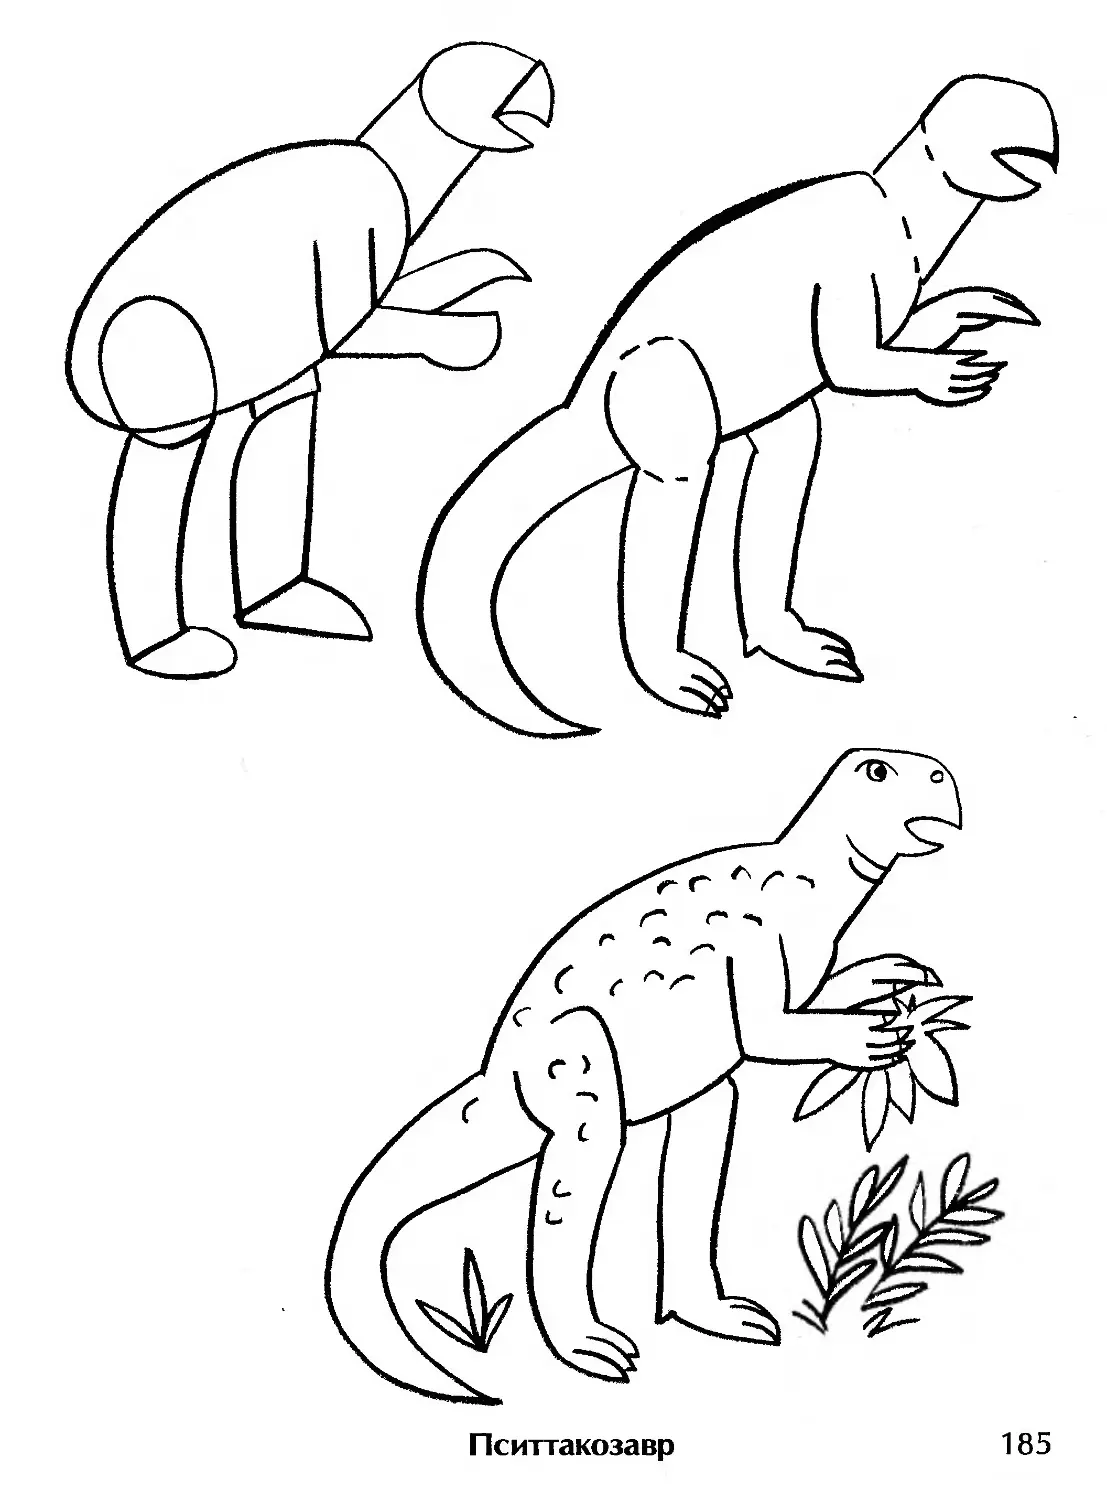 Пситтакозавр раскраска